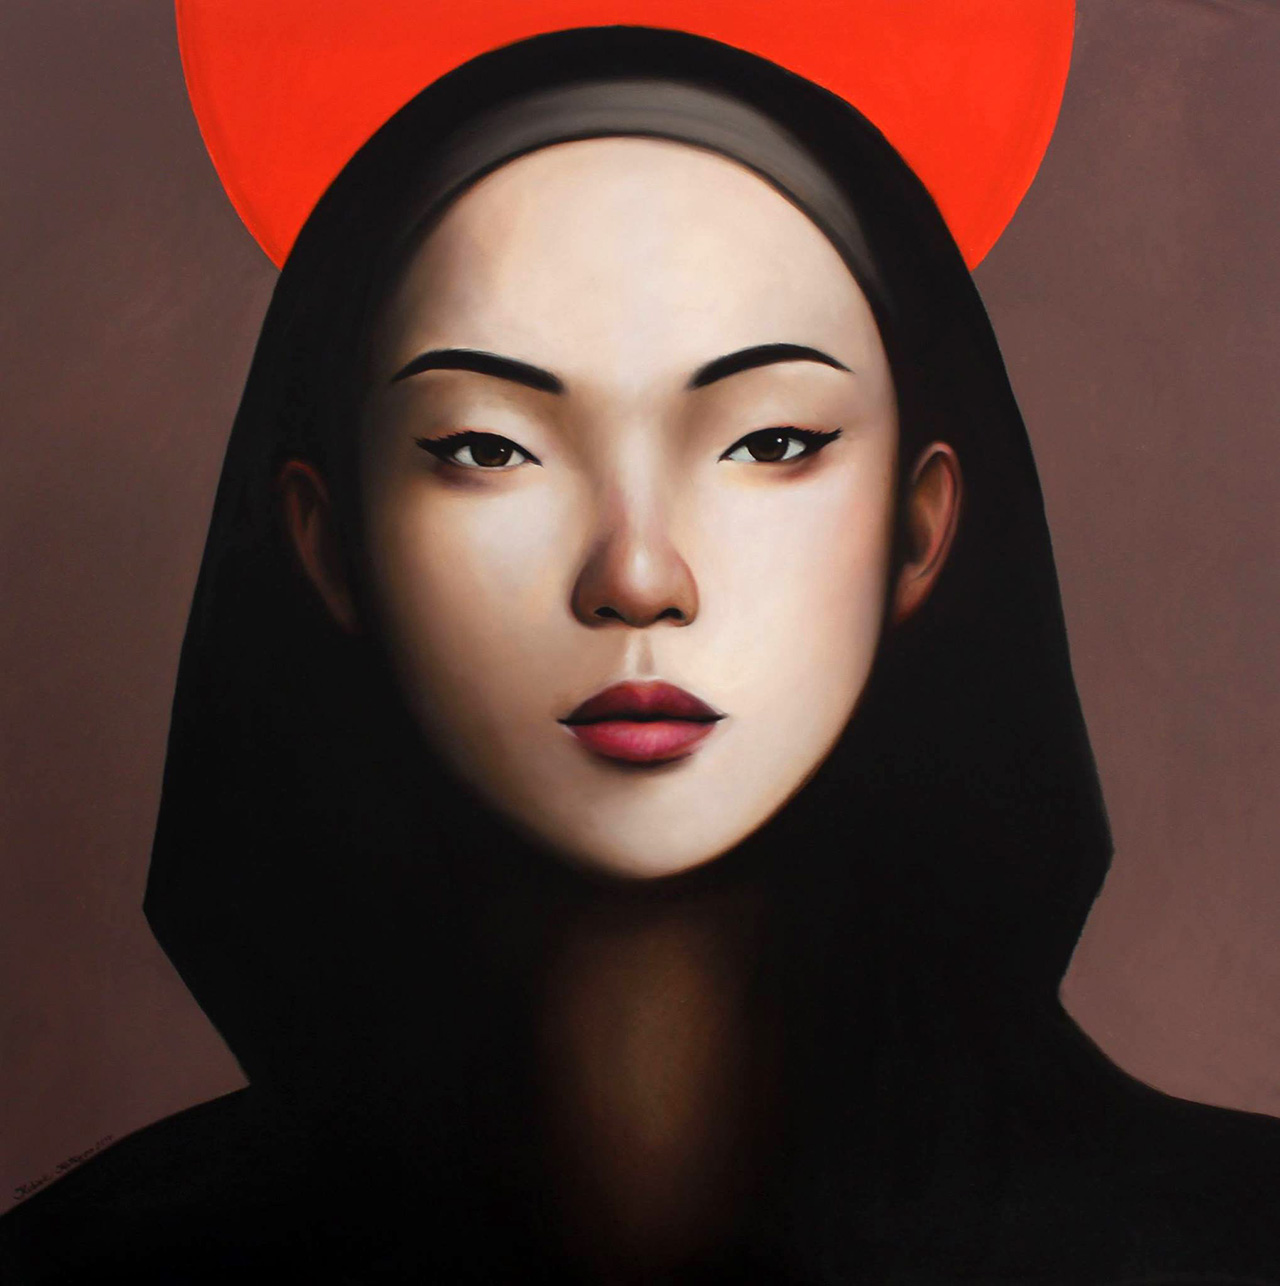 Katarzyna Kubiak - Japanese girl with a red halo (Oil on Canvas | Size: 106 x 106 cm | Price: 5500 PLN)